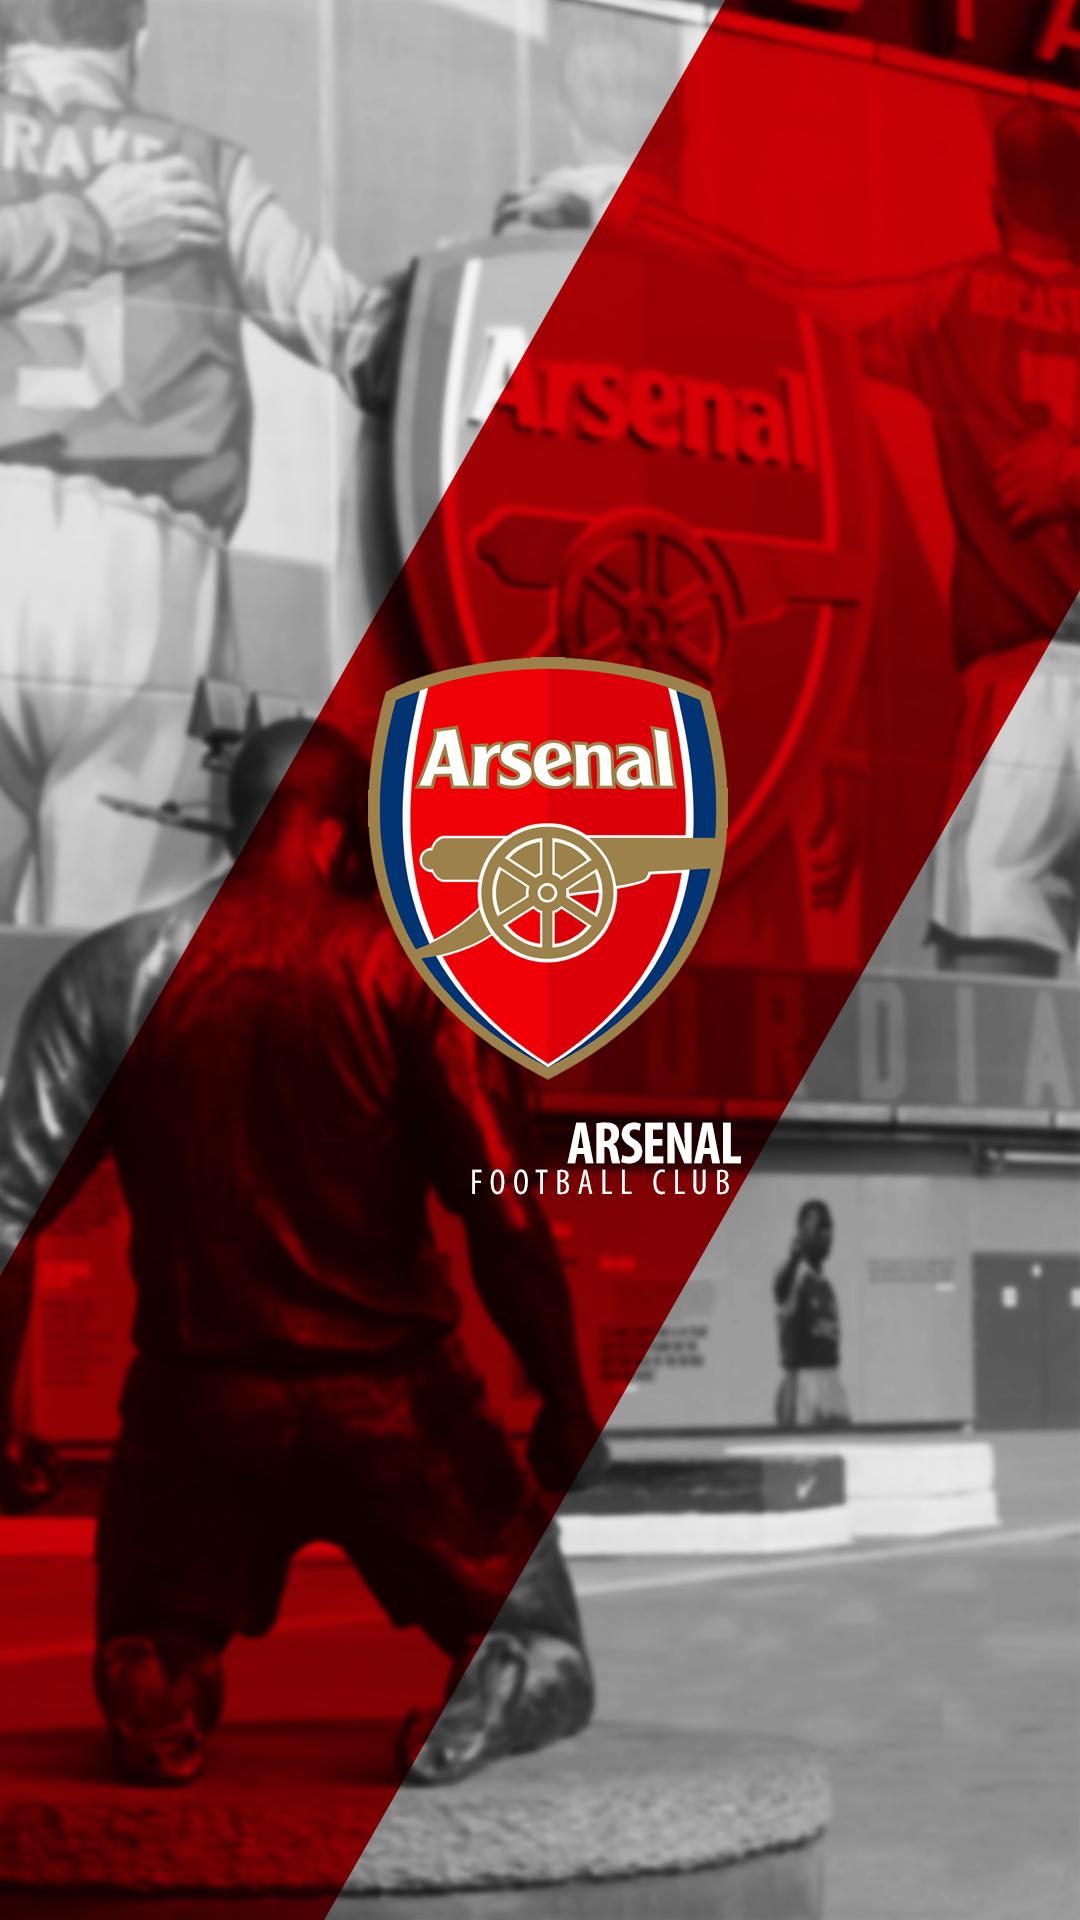 Arsenal Wallpaper Android - Arsenal Wallpaper Hd 2018 , HD Wallpaper & Backgrounds